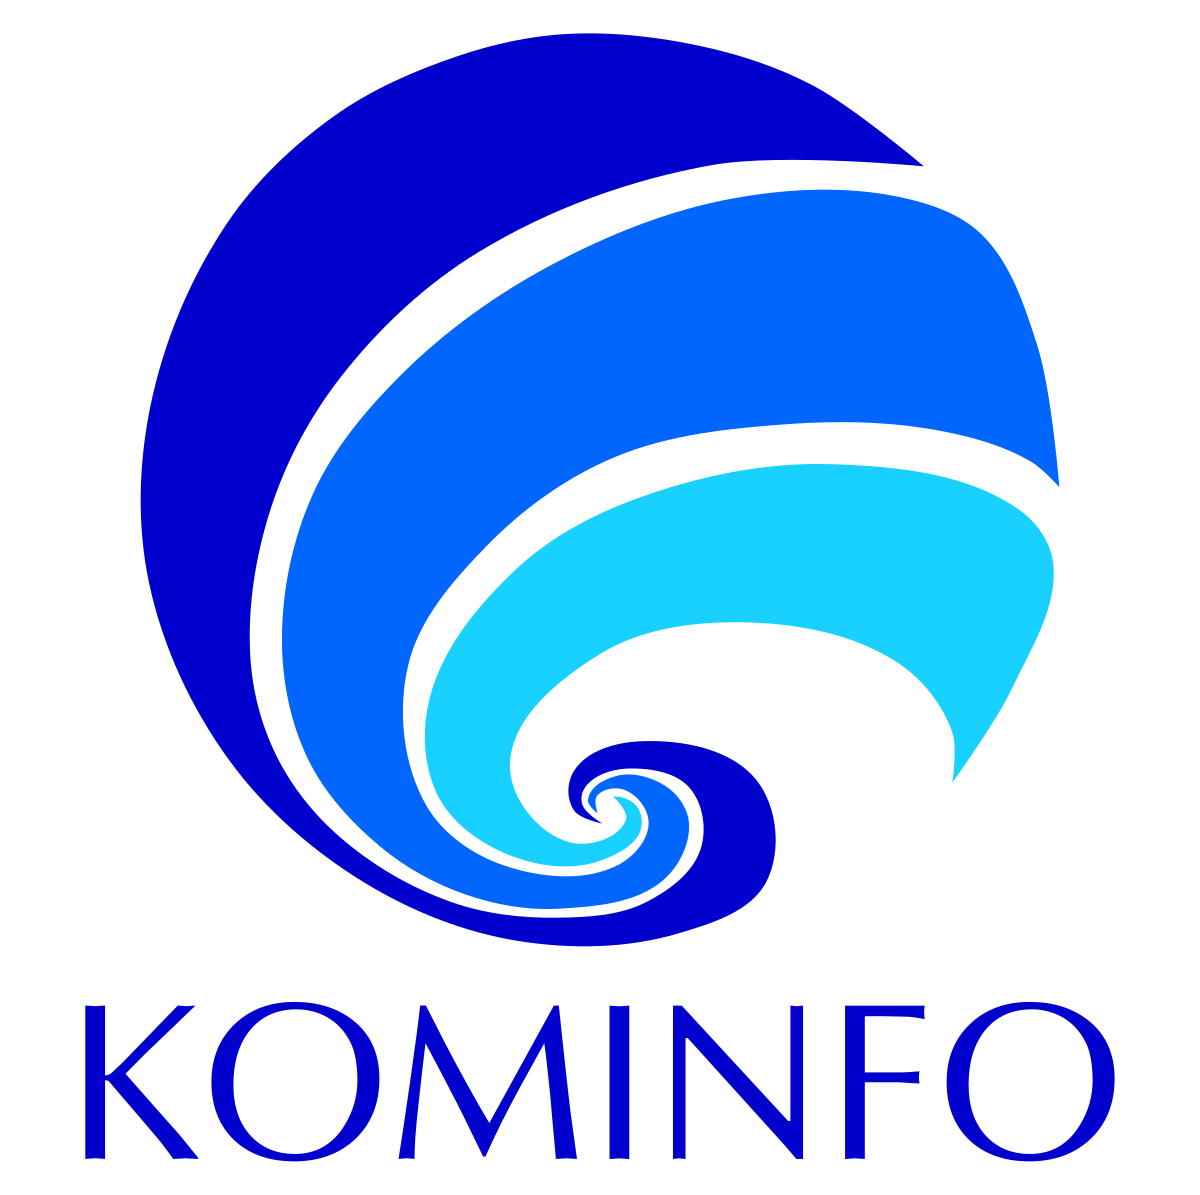 Terdaftar Digital Broker oleh Kominfo